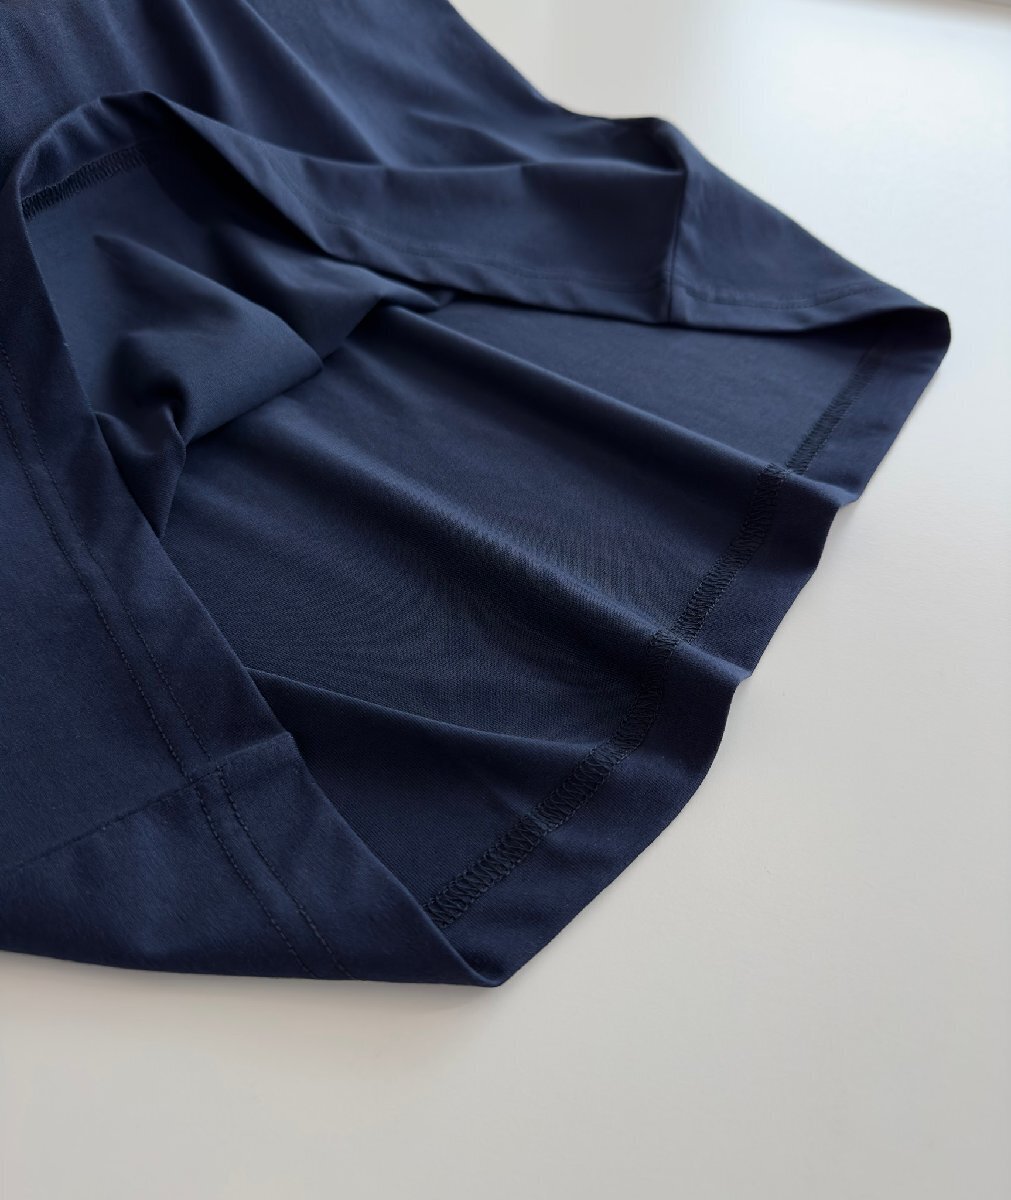 BRUNELLO CUCINELLI(ブルネロ クチネリ) メンズ半袖T-シャツ 丸首 綿 トップス カットソー クルーネック Lサイズ ネイビー ロゴプリント_画像9